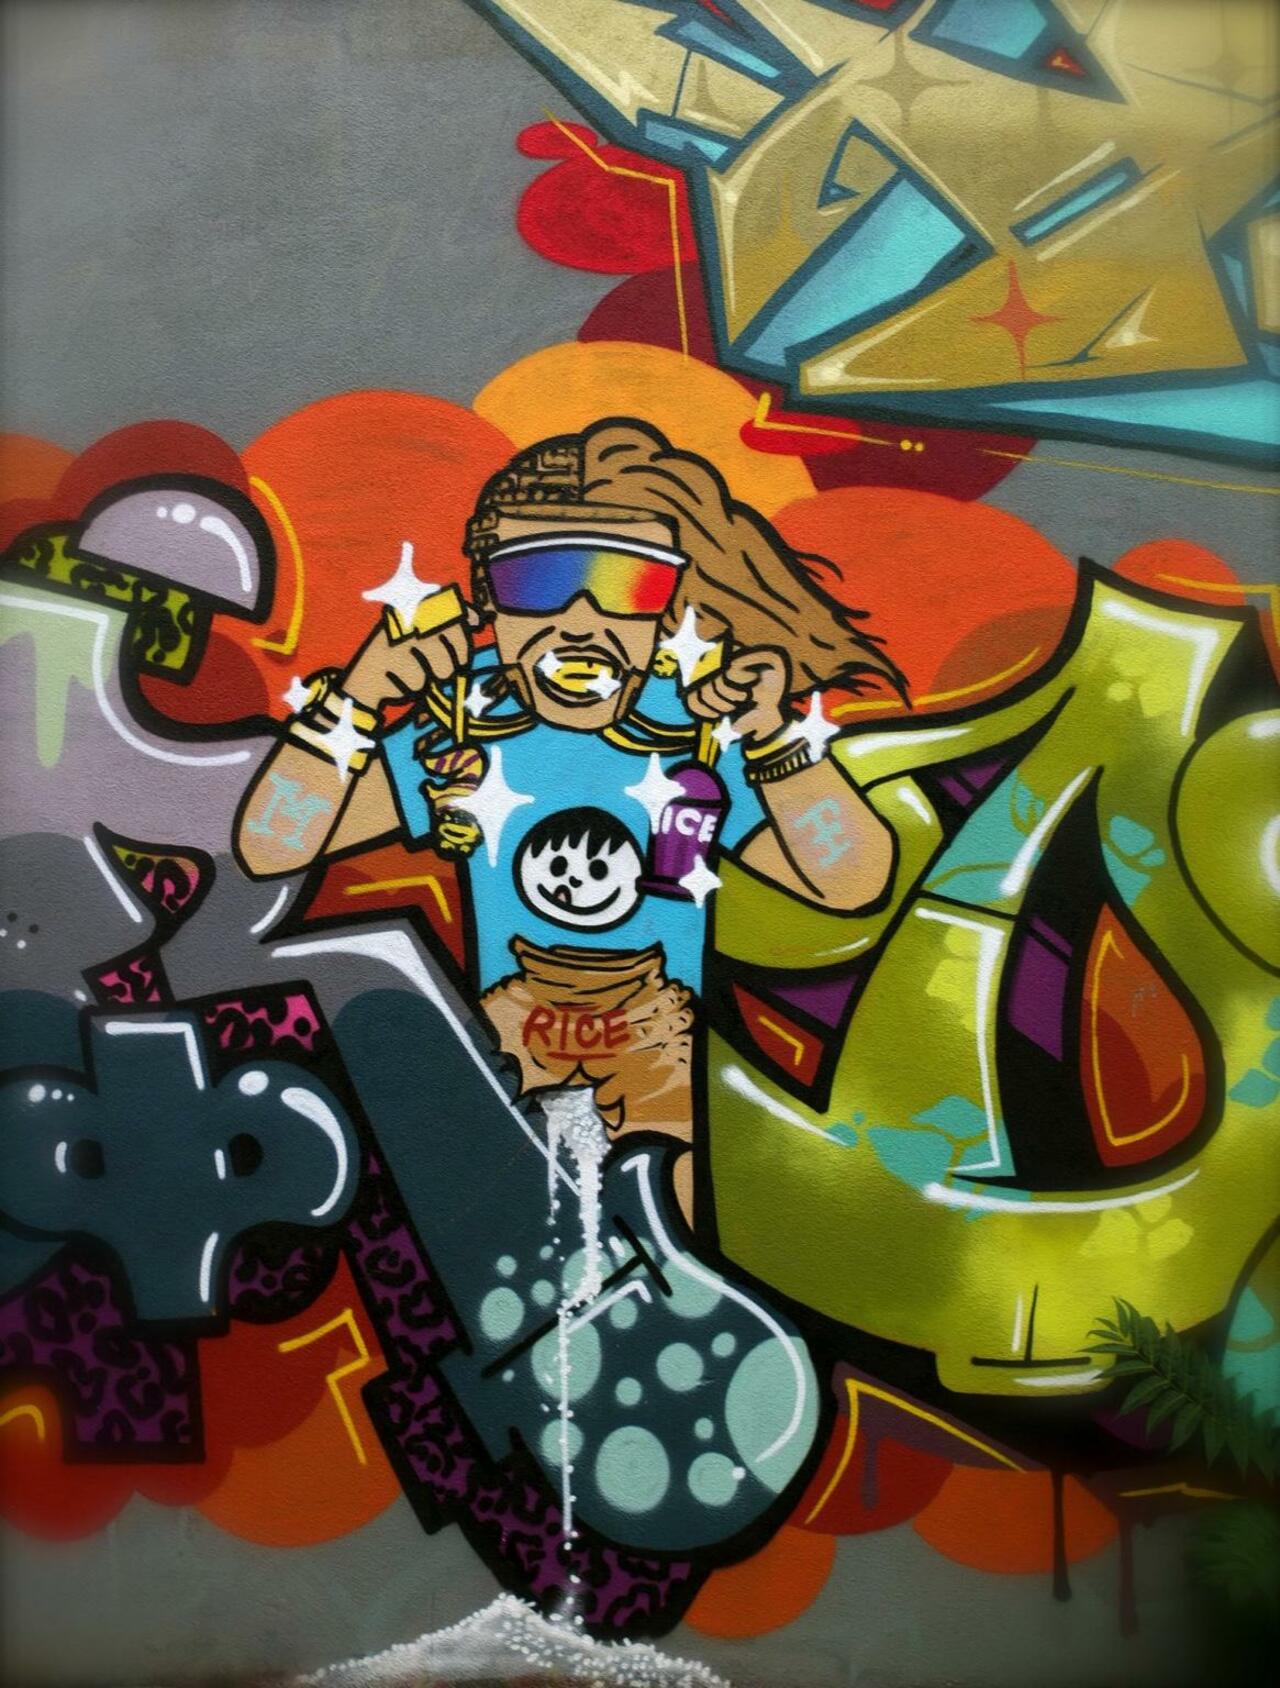 Classic #streetart #graffiti #sprayart #urbanart #colour #art #design #streetsoftoronto http://t.co/abf5i3mLRC